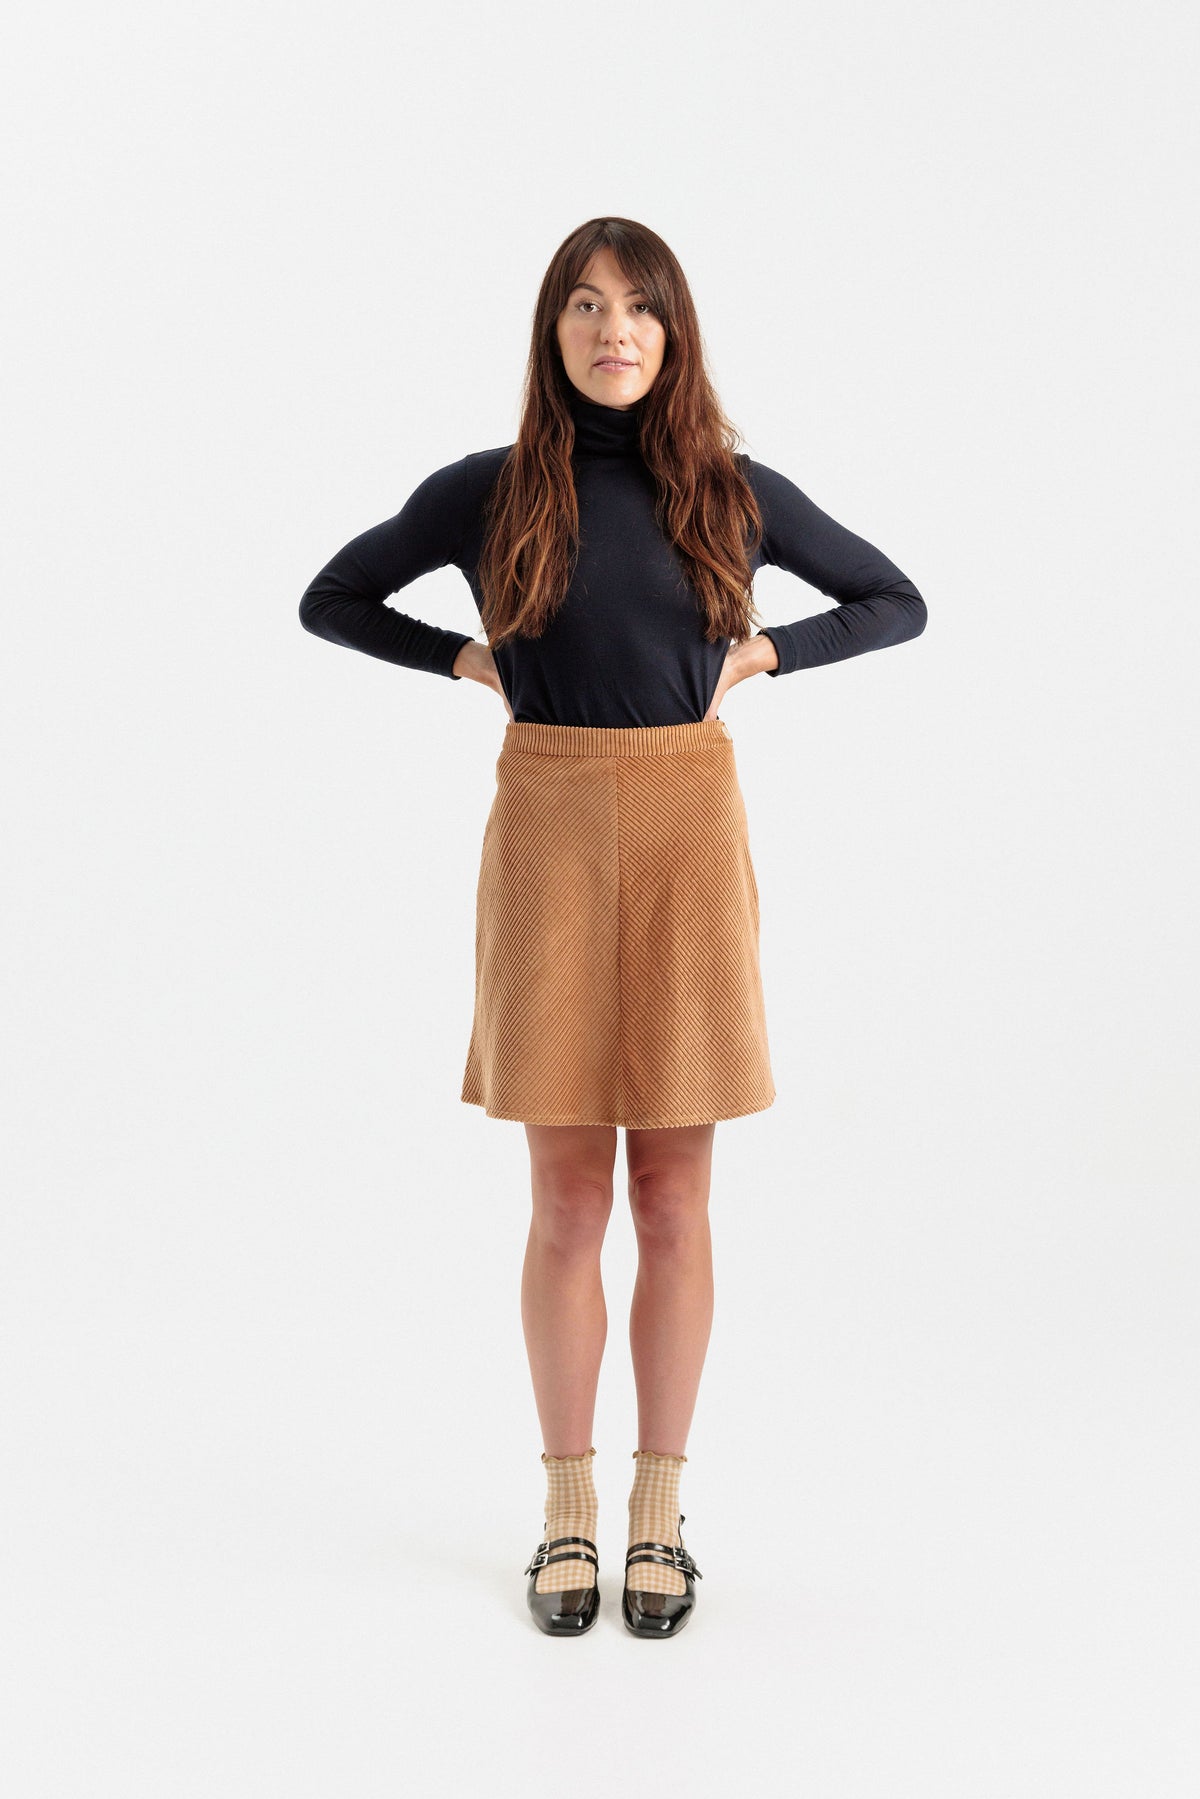 Lulee Dress / Skirt